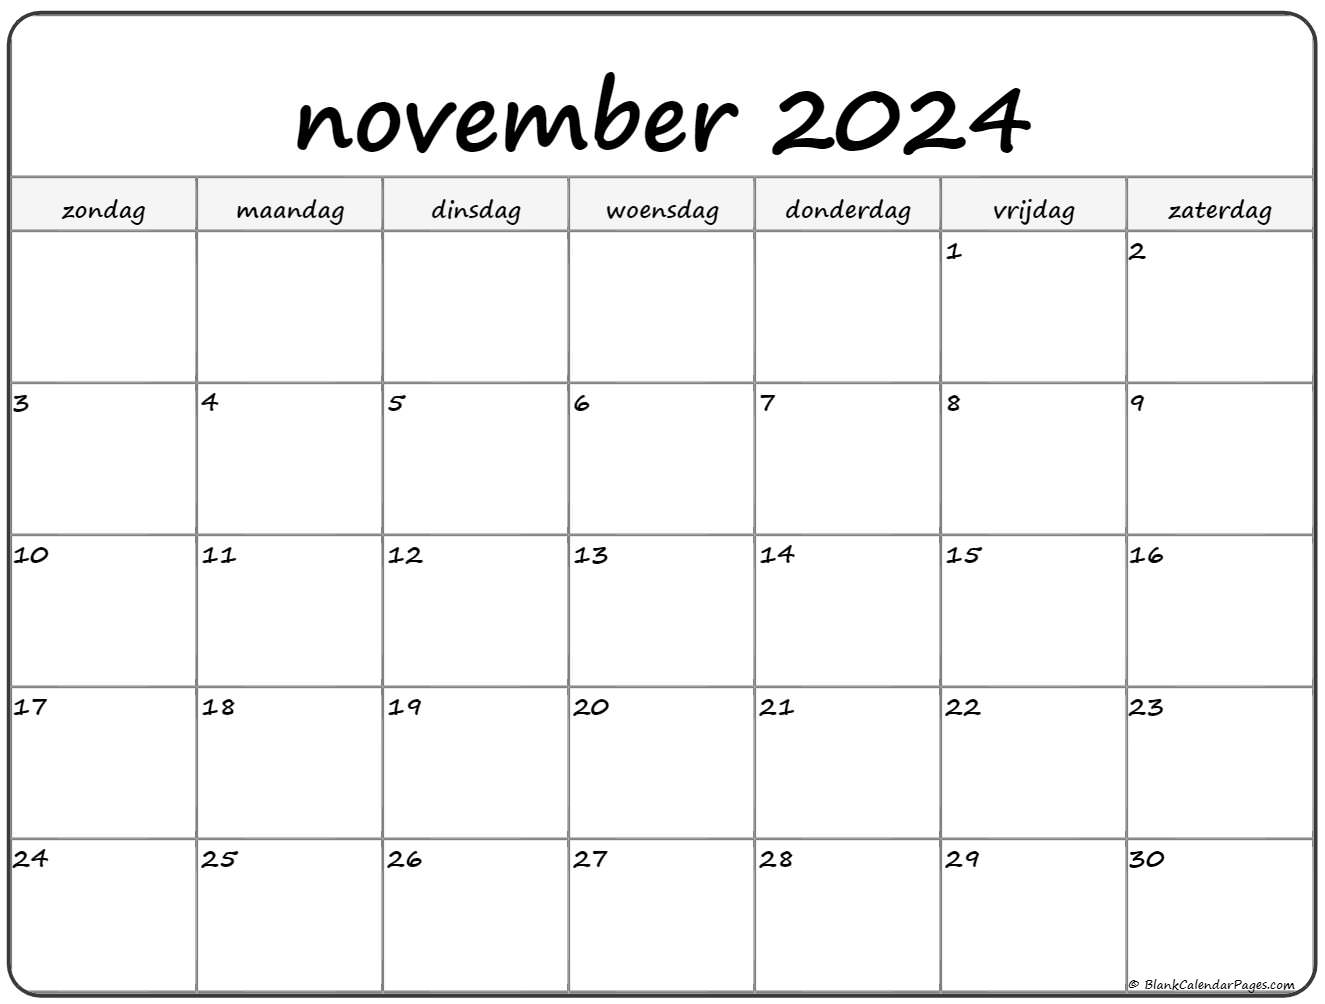 Kalendar november 2021